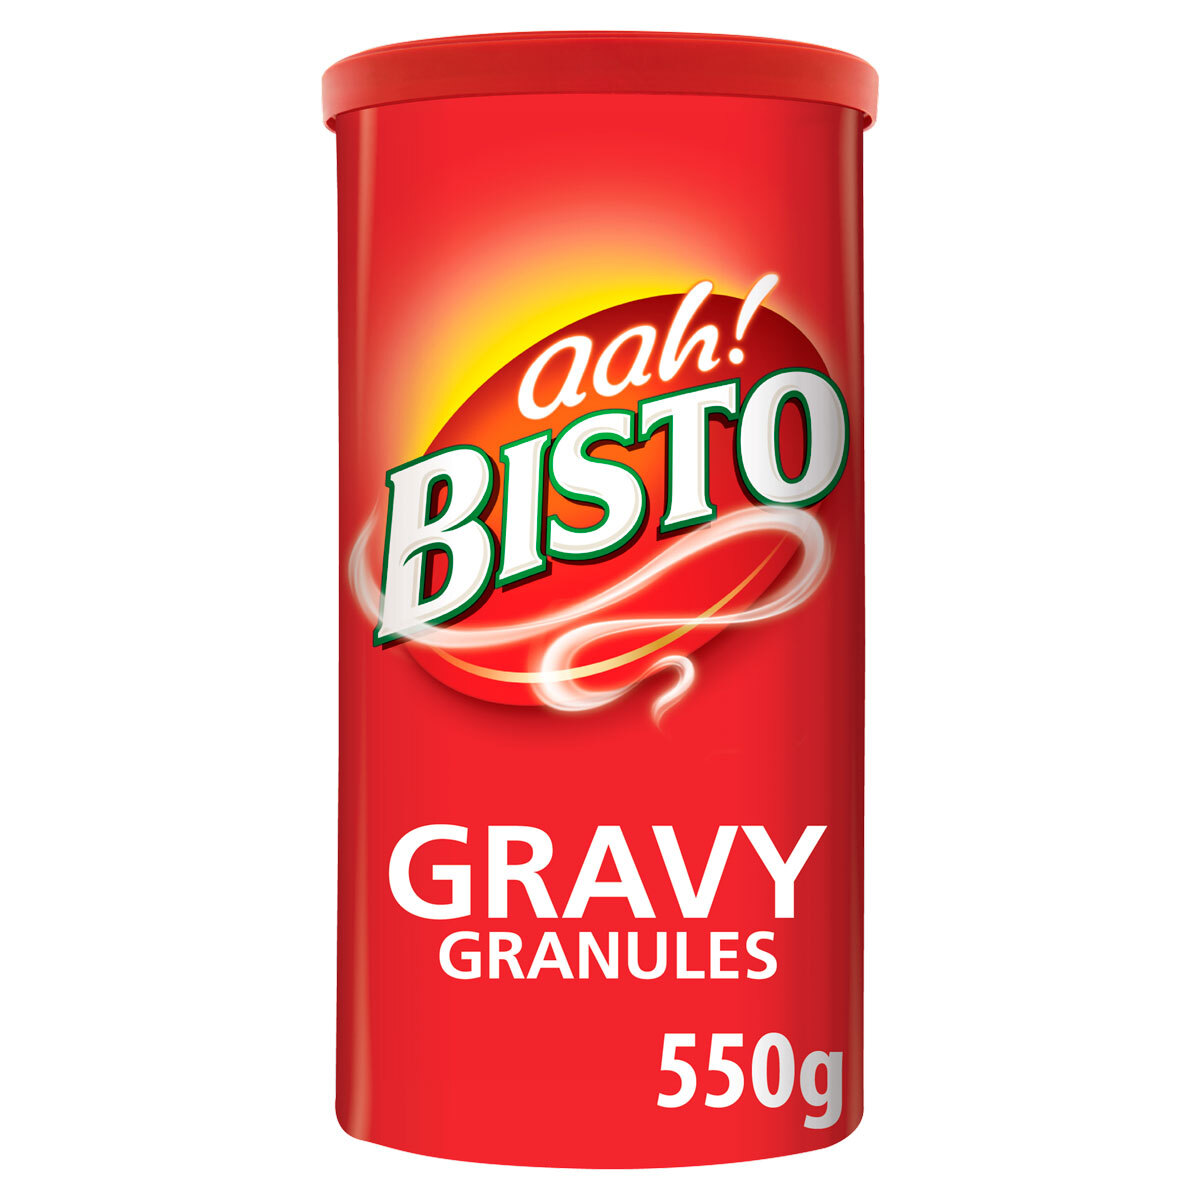 Bisto Gravy Granules, 2 x 550g